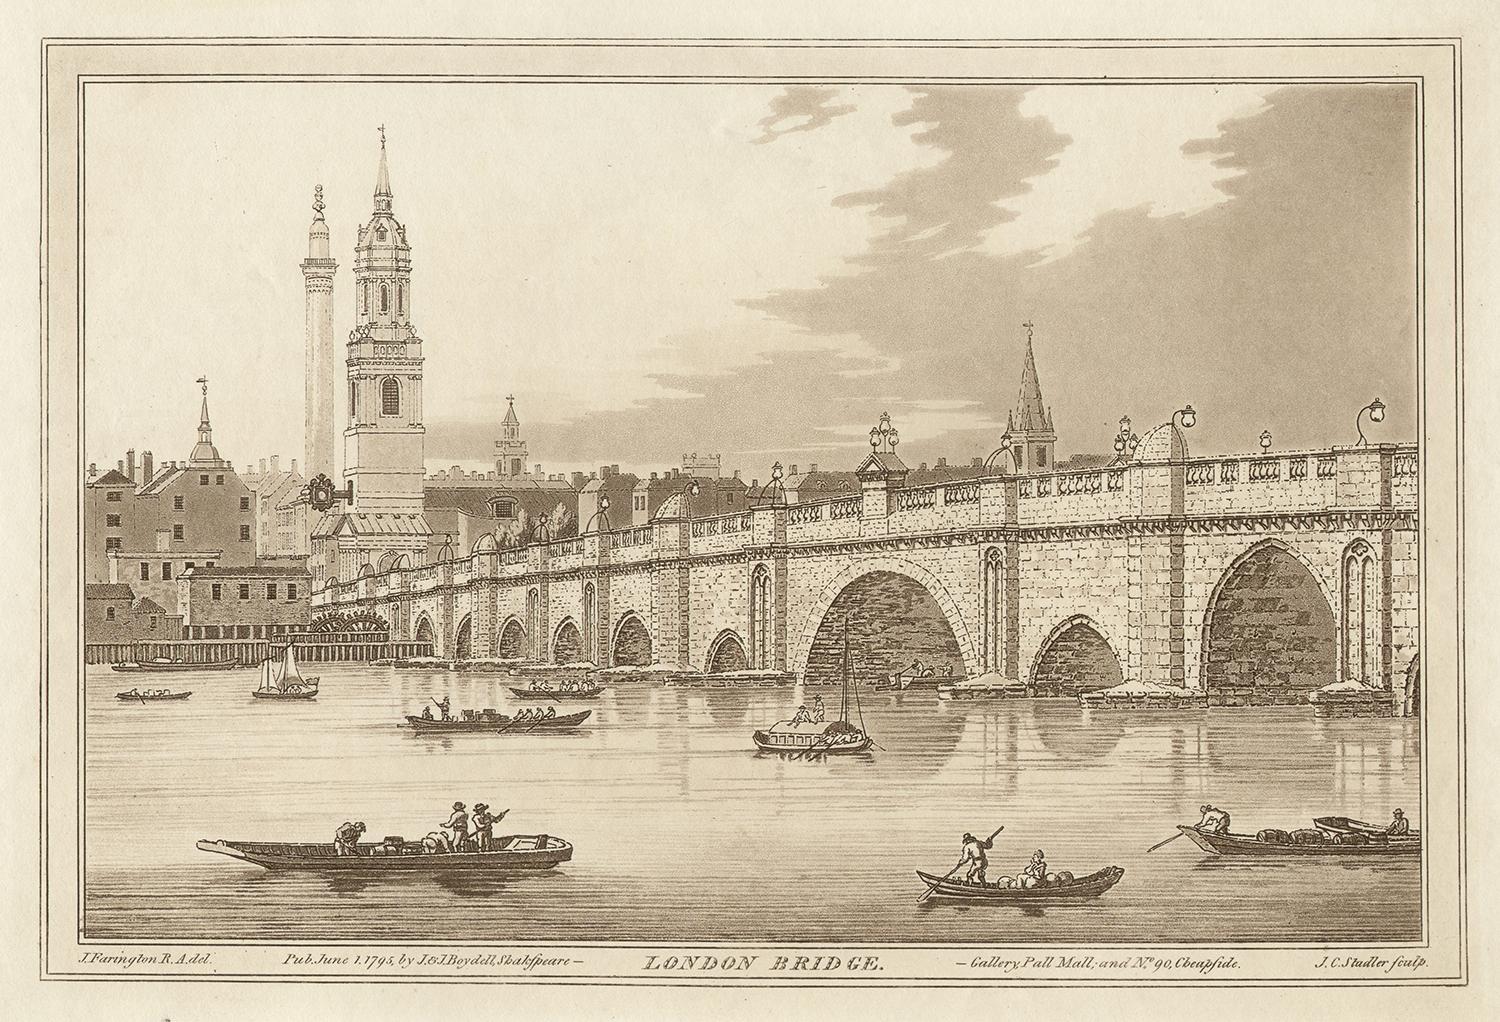 Joseph Constantine Stadler (fl London, 1780-1822) after Joseph Farington (1747-1821)  Landscape Print - London Bridge, C18th English aquatint